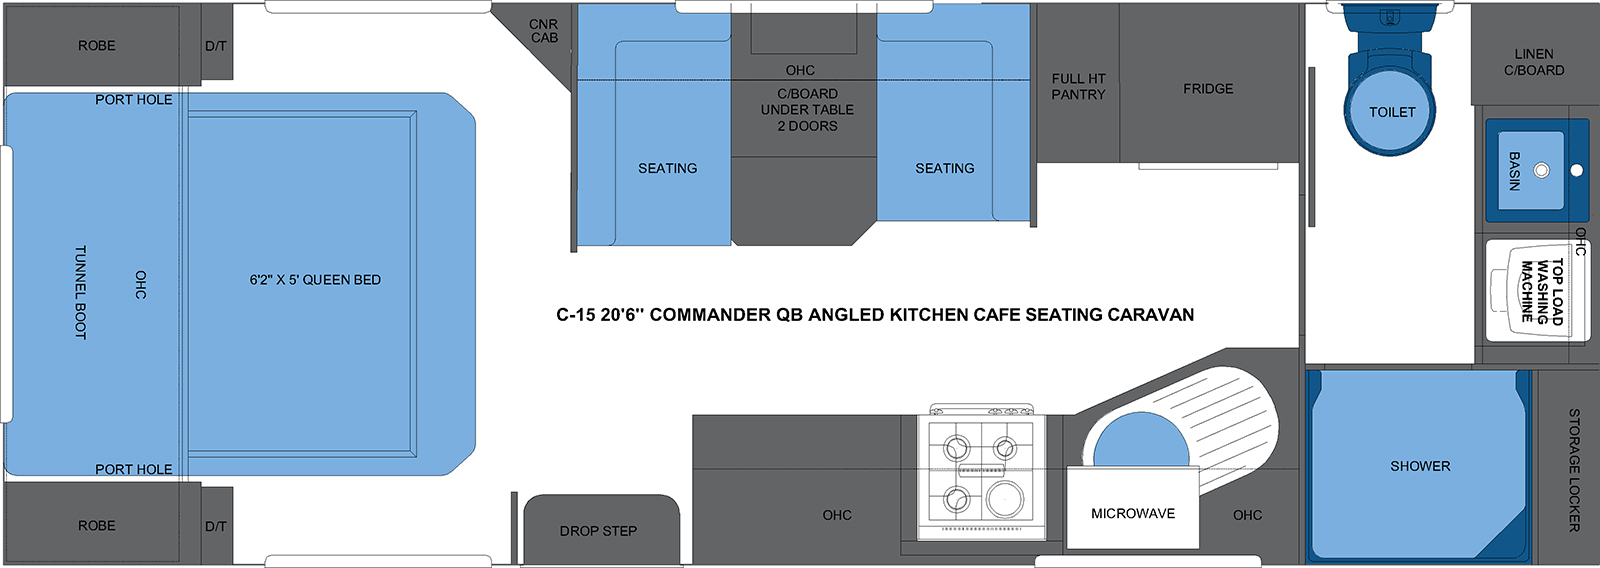 C-15 20'6 COMMANDER QB ANGLED KITCHEN CAFE SEATING CARAVAN